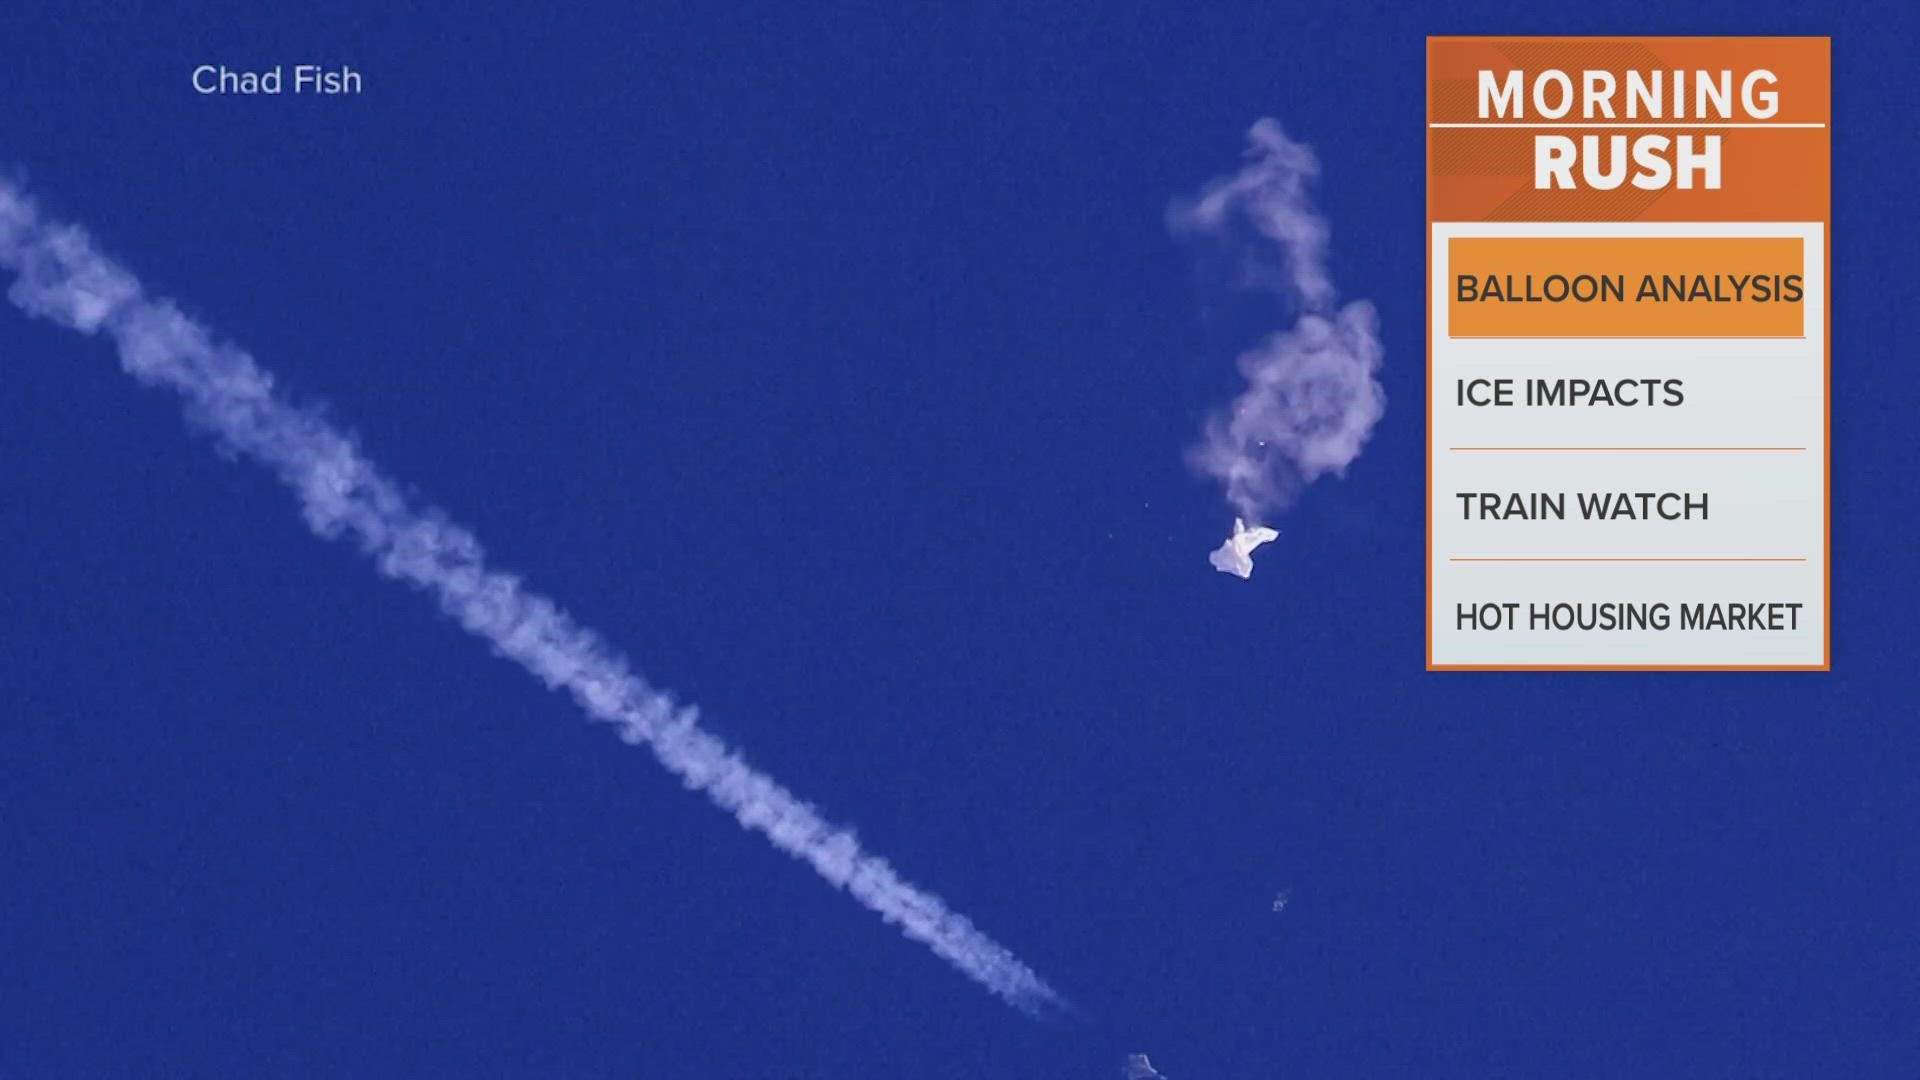 On Feb. 4, the U.S. military shot down the balloon off the South Carolina coast.